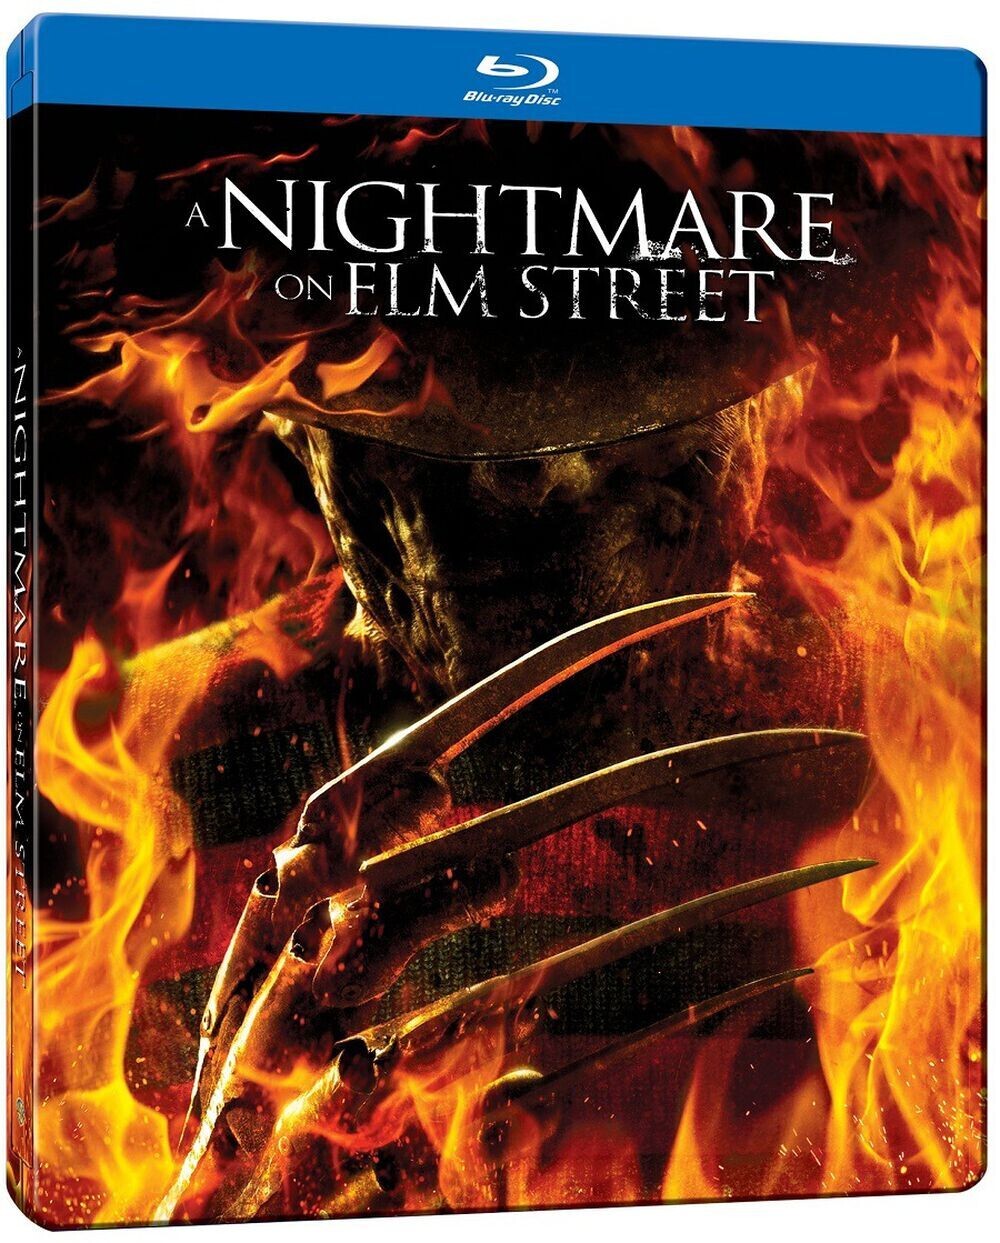 A Nightmare on Elm Street (2010) Blu-ray Steelbook [Limited Edition] [FYE Exclusive]